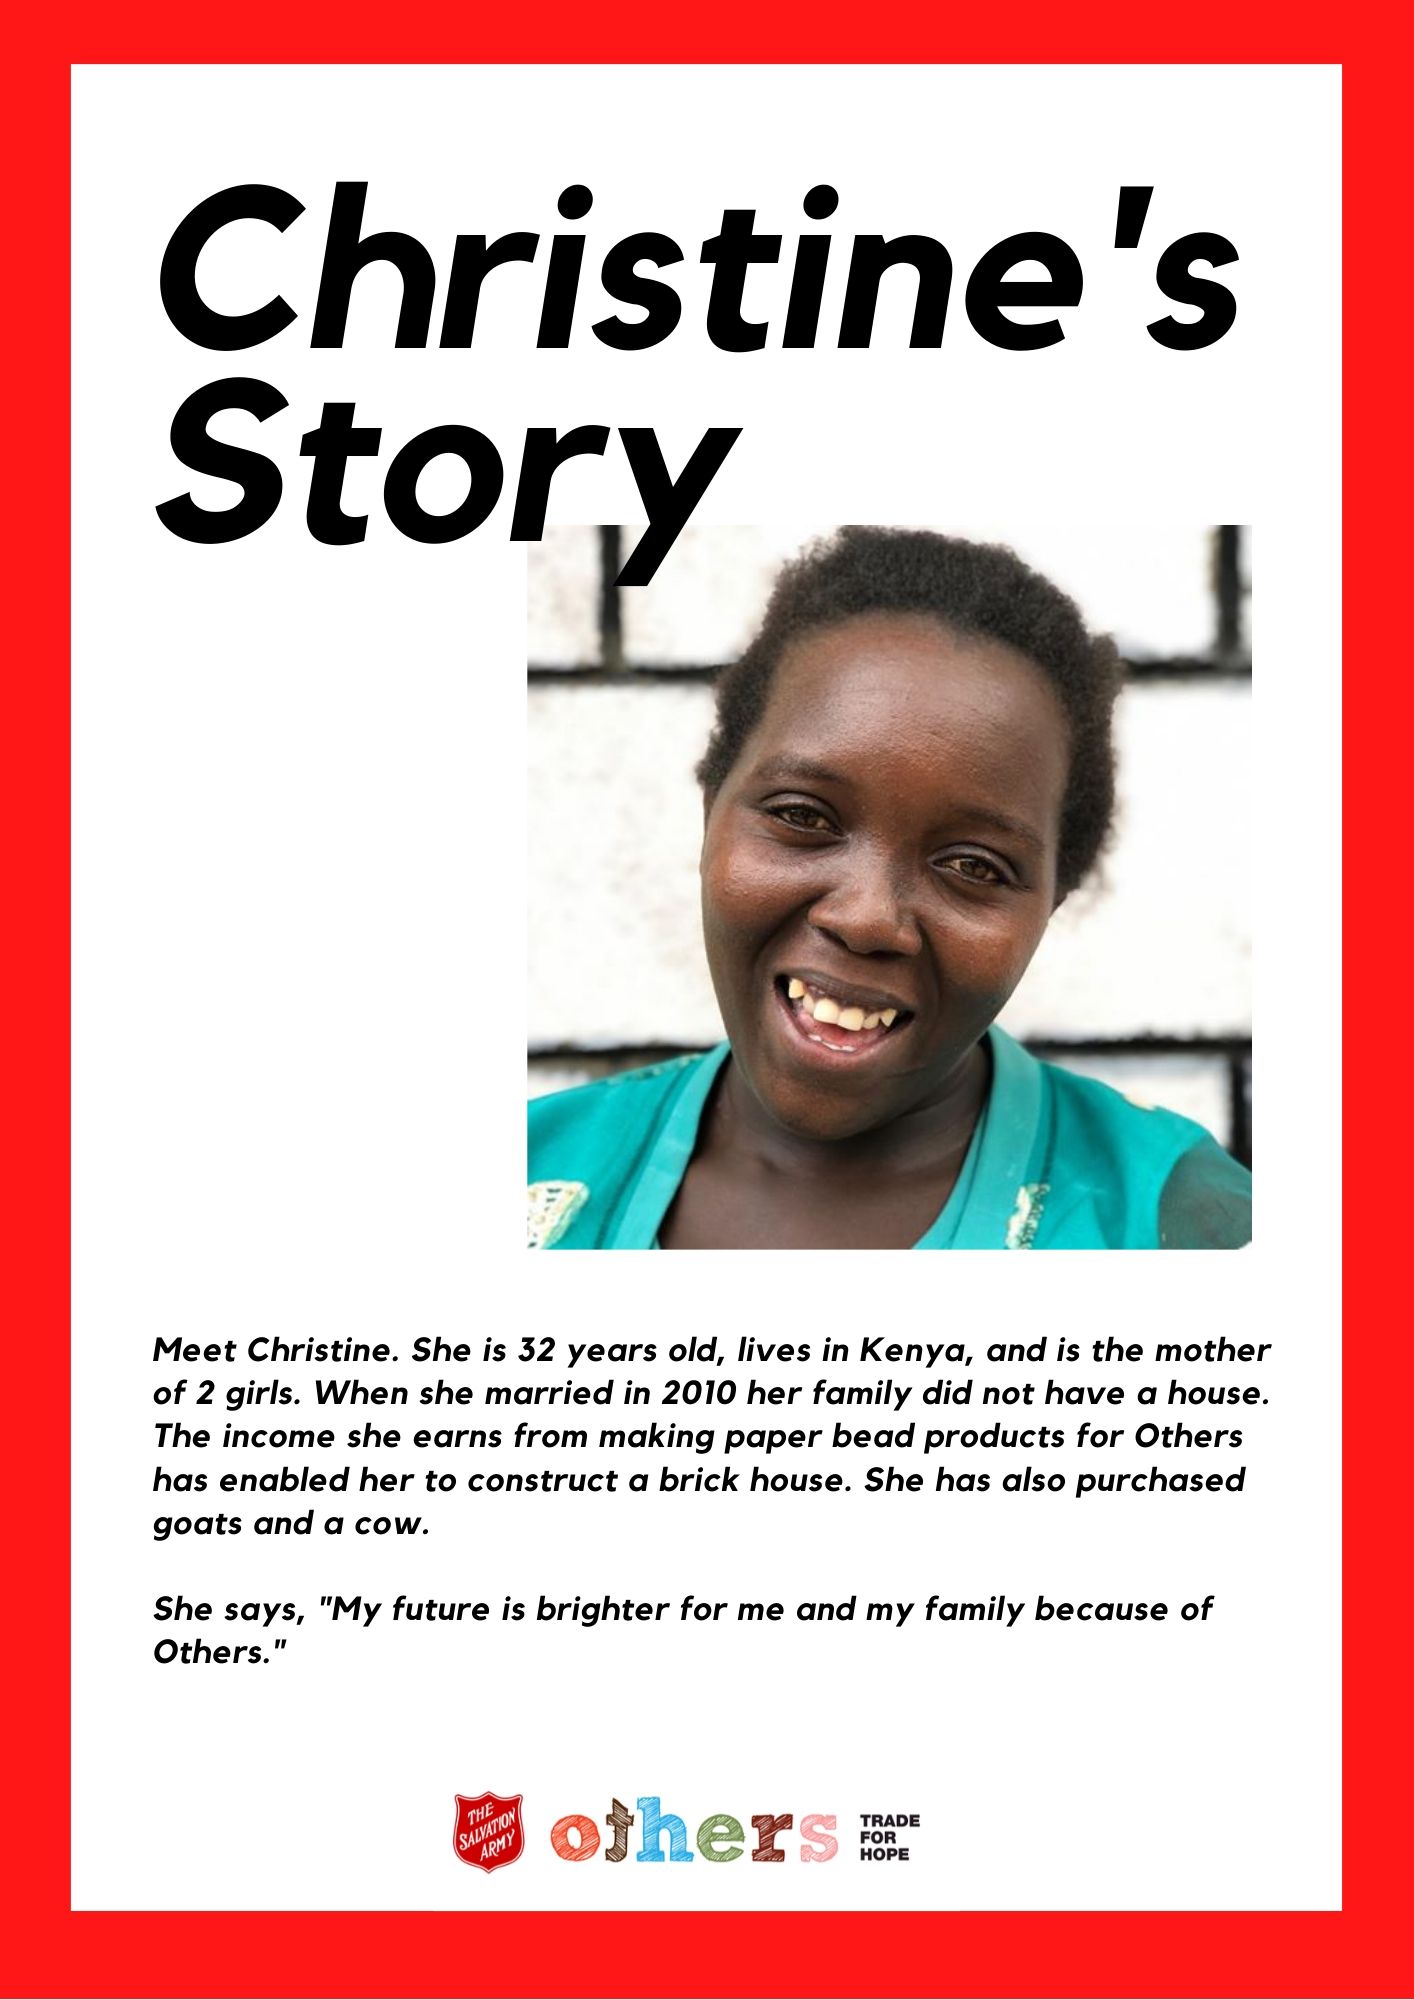 Christina's story